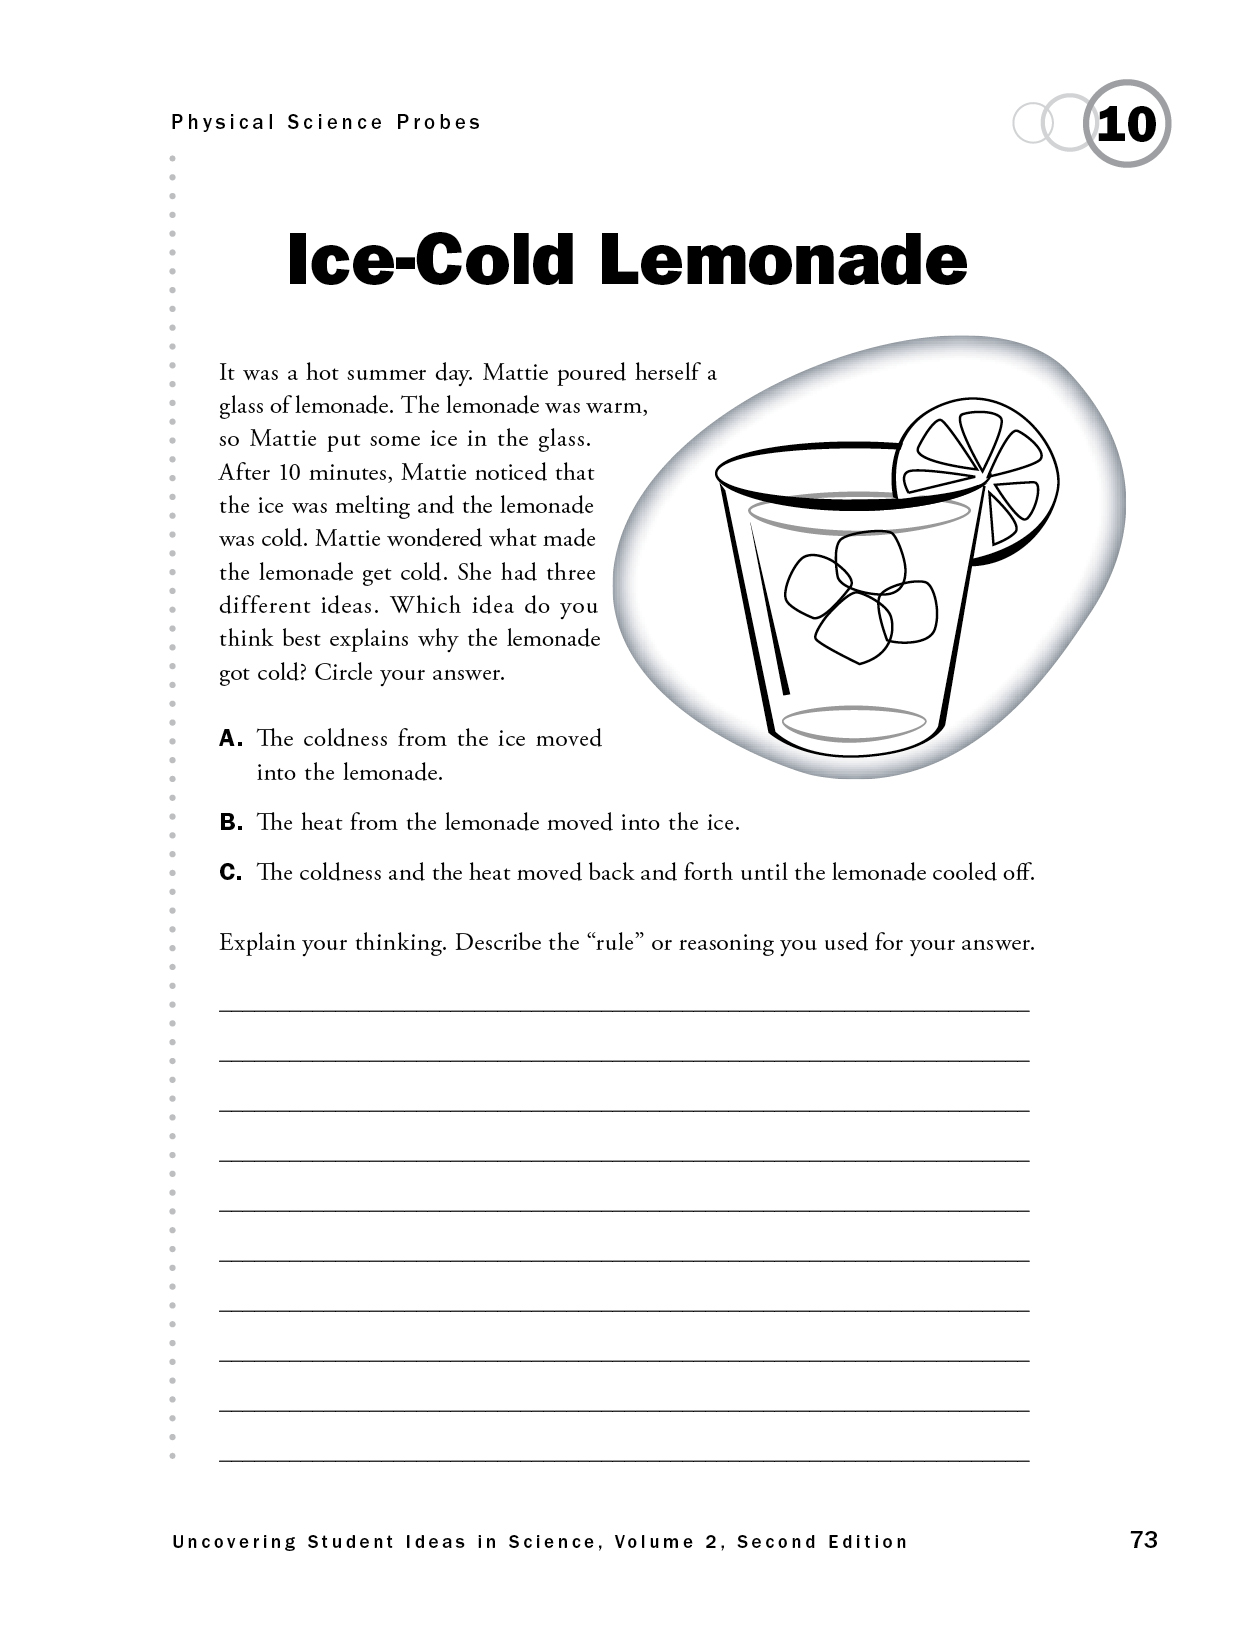 Ice-Cold Lemonade